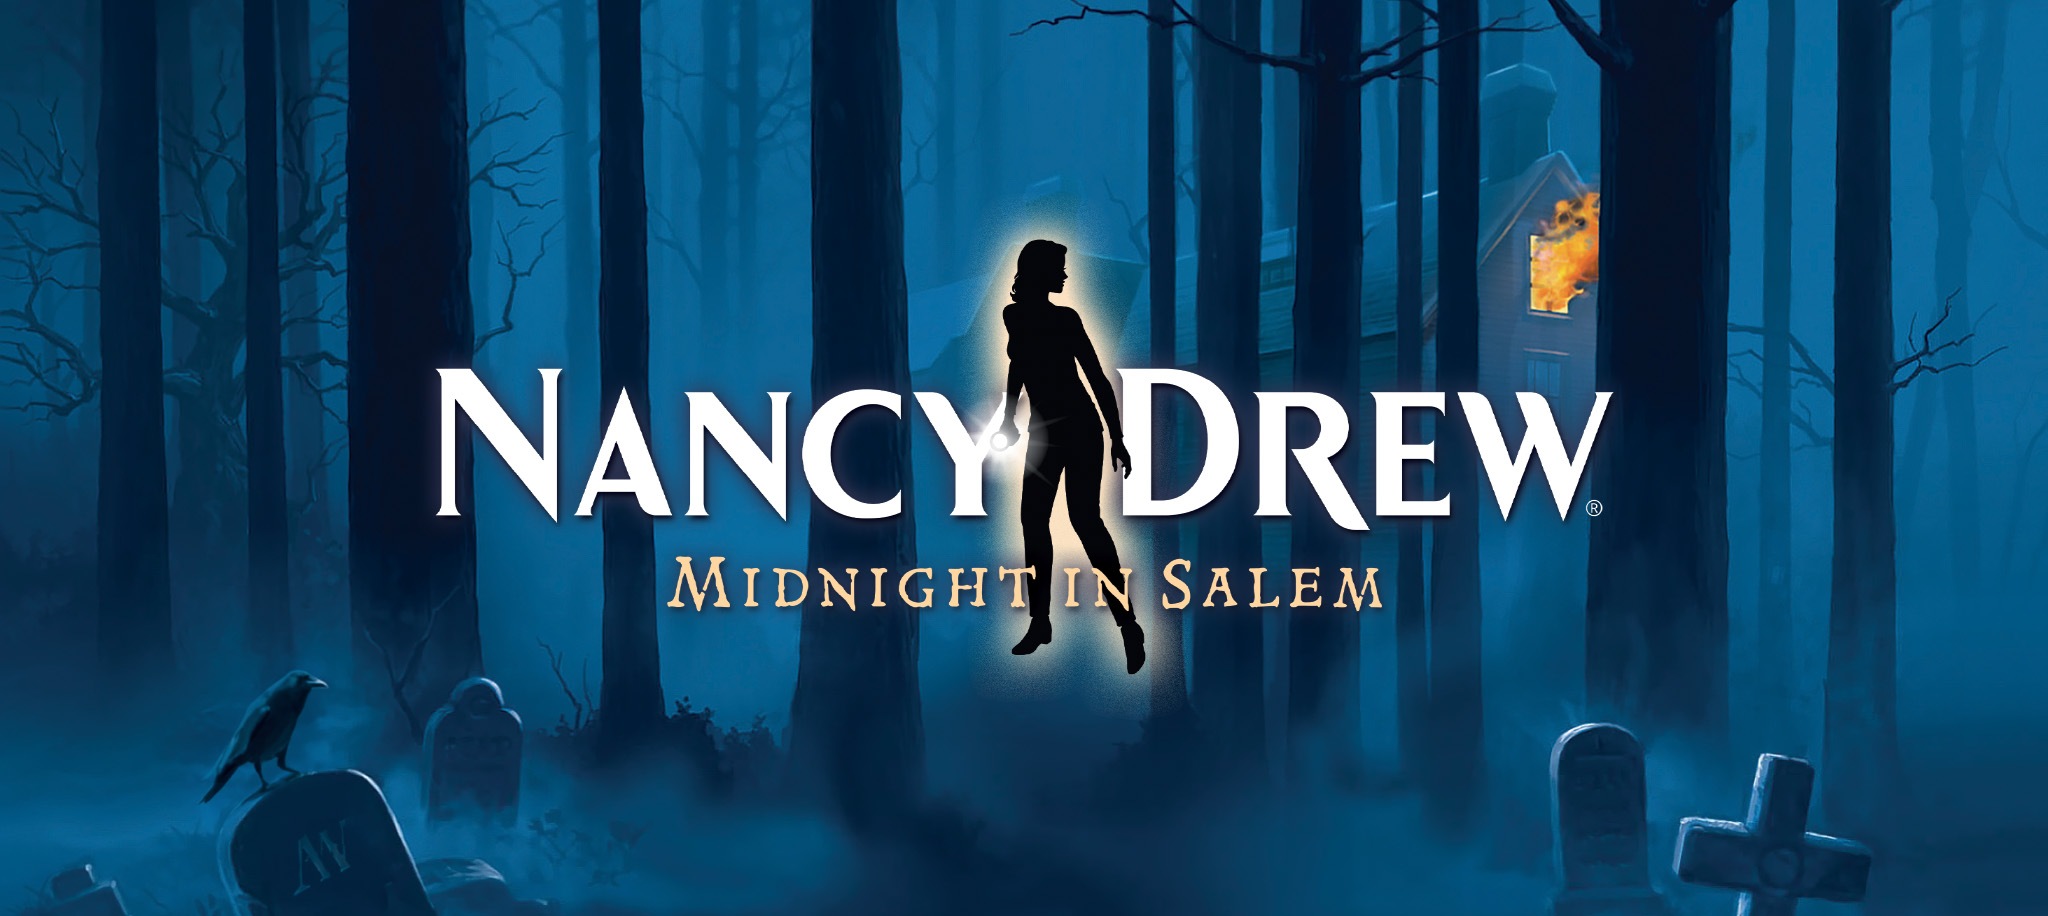 Midnight in Salem